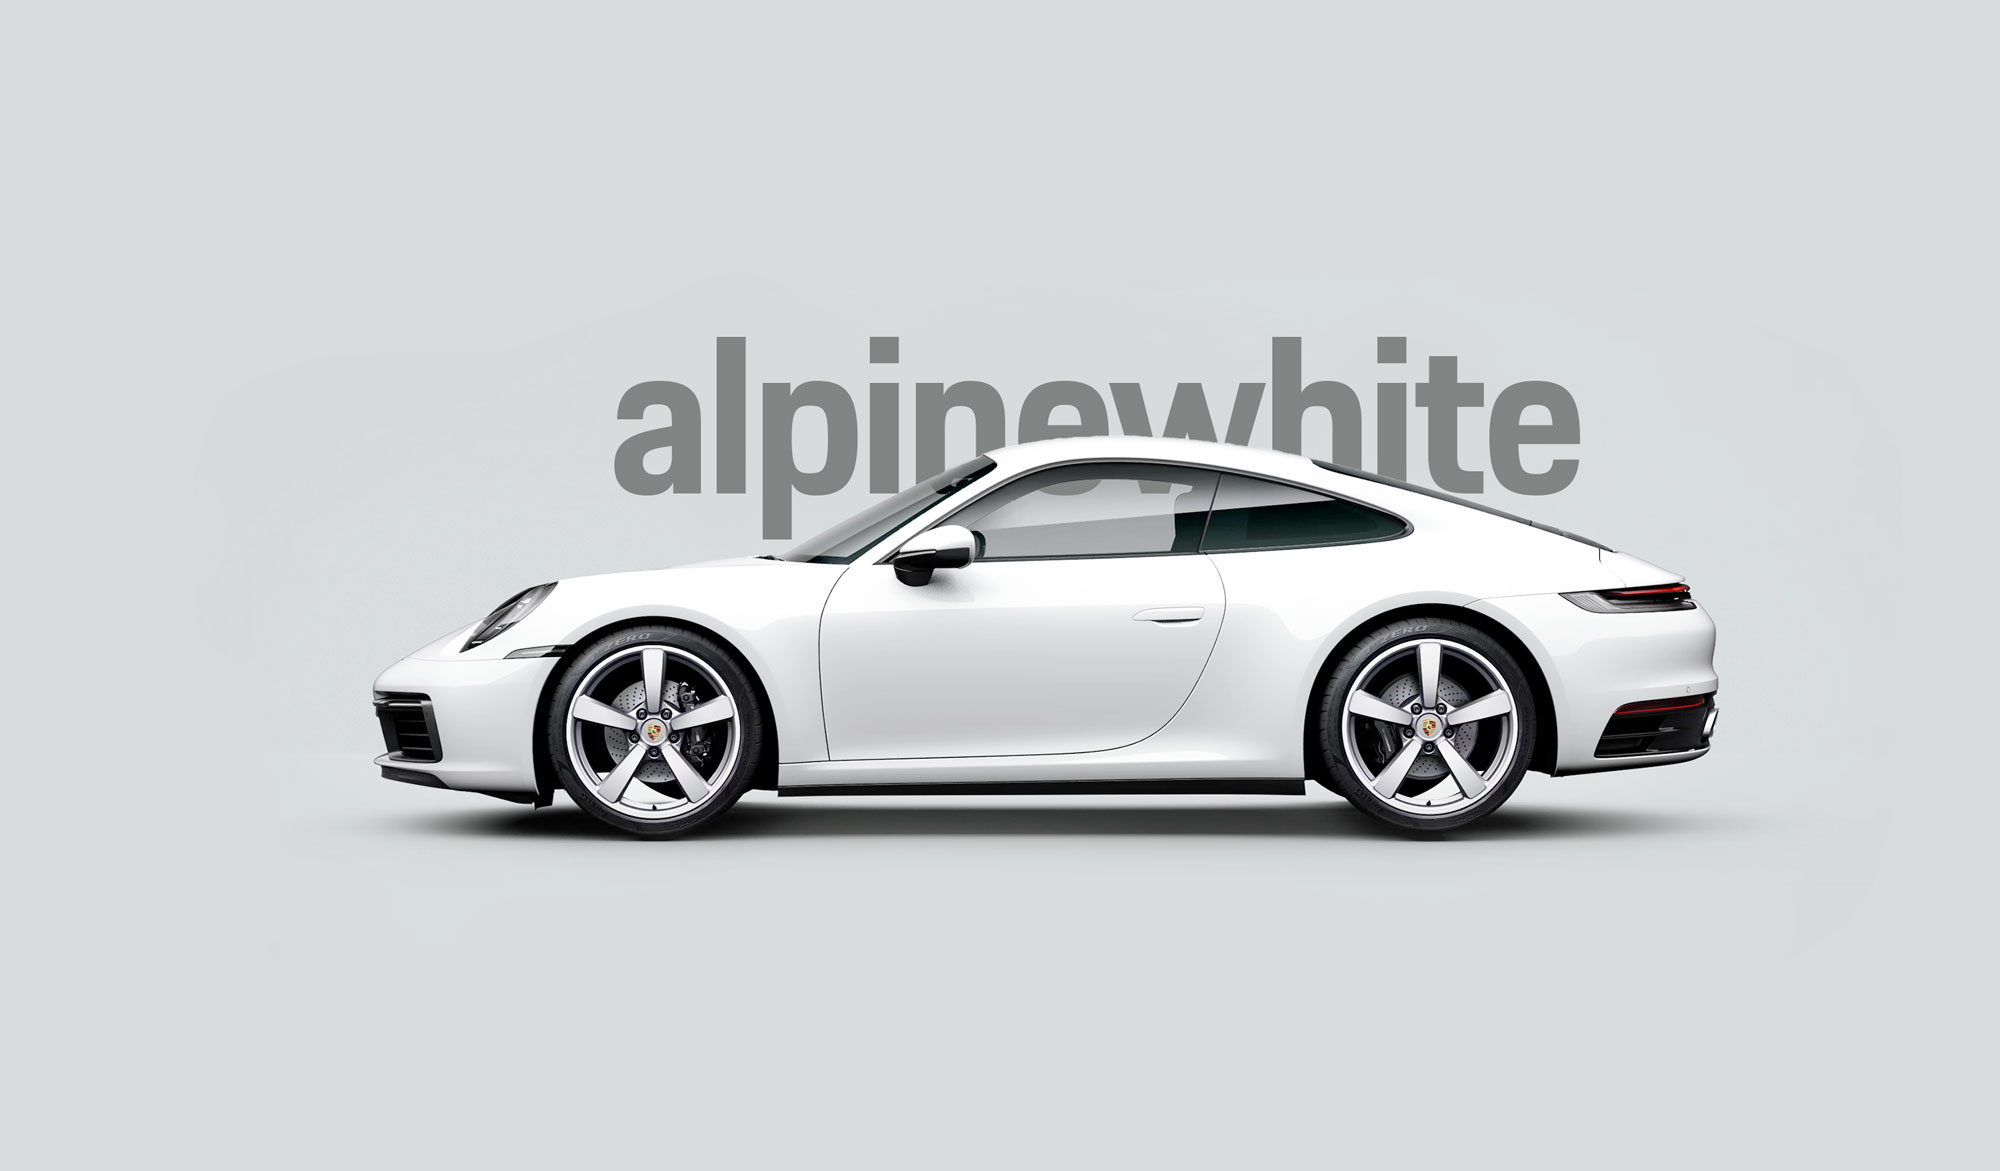 Porsche 911 in the Paint To Sample Plus Alpine White colour